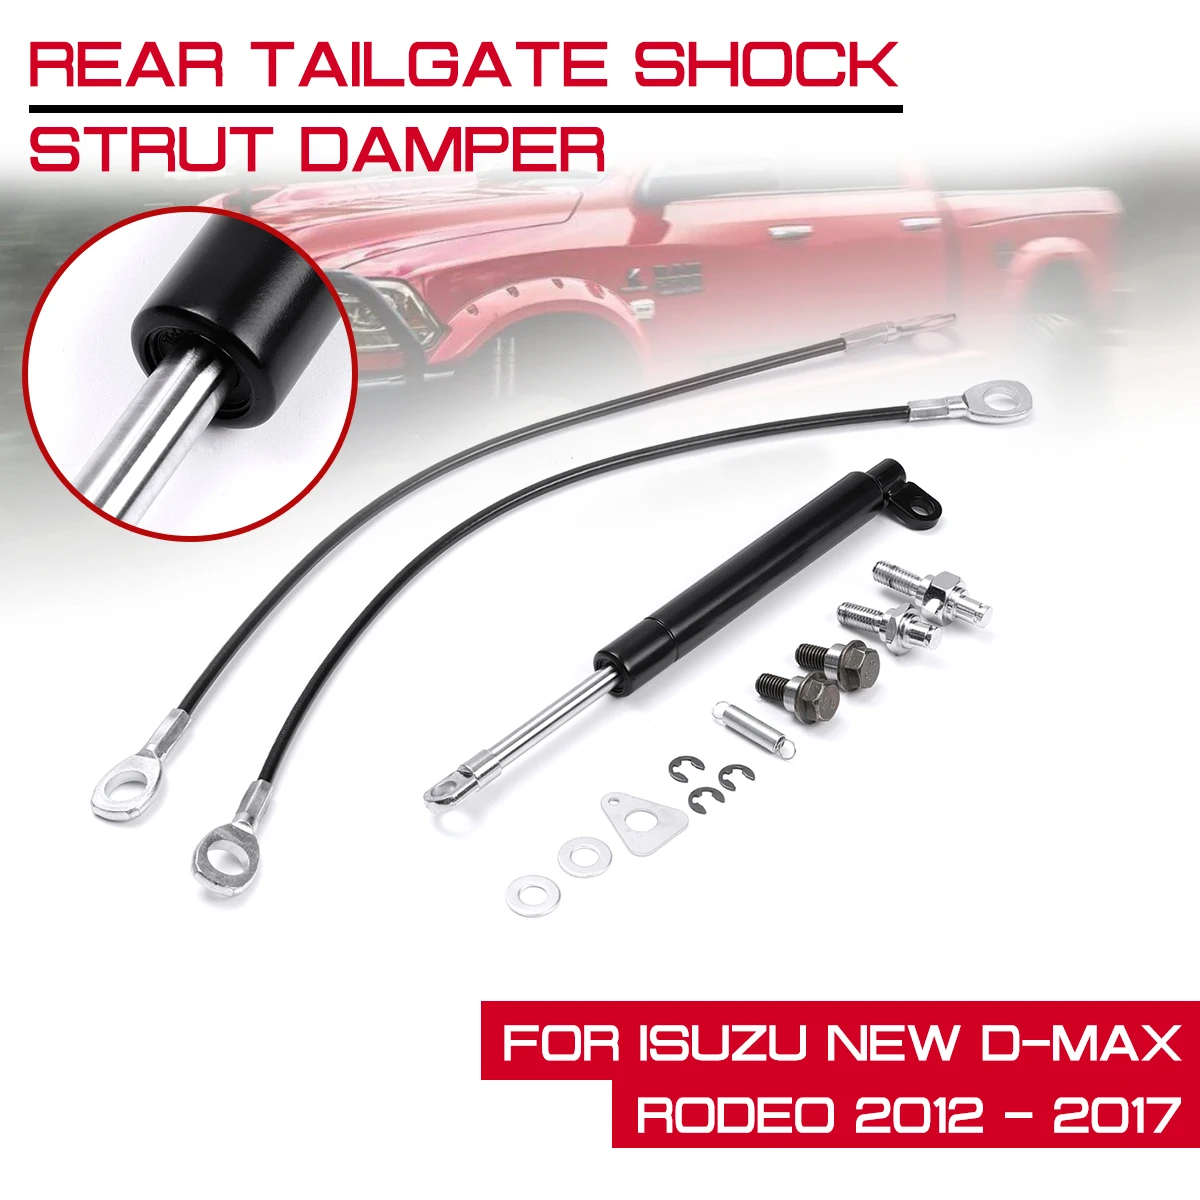 

Car Rear Trunk Tailgate Boot Gas Shock Lift Struts Strut Support Rod Arm Bars for Isuzu New D-MAX Rodeo 2012 - 2017